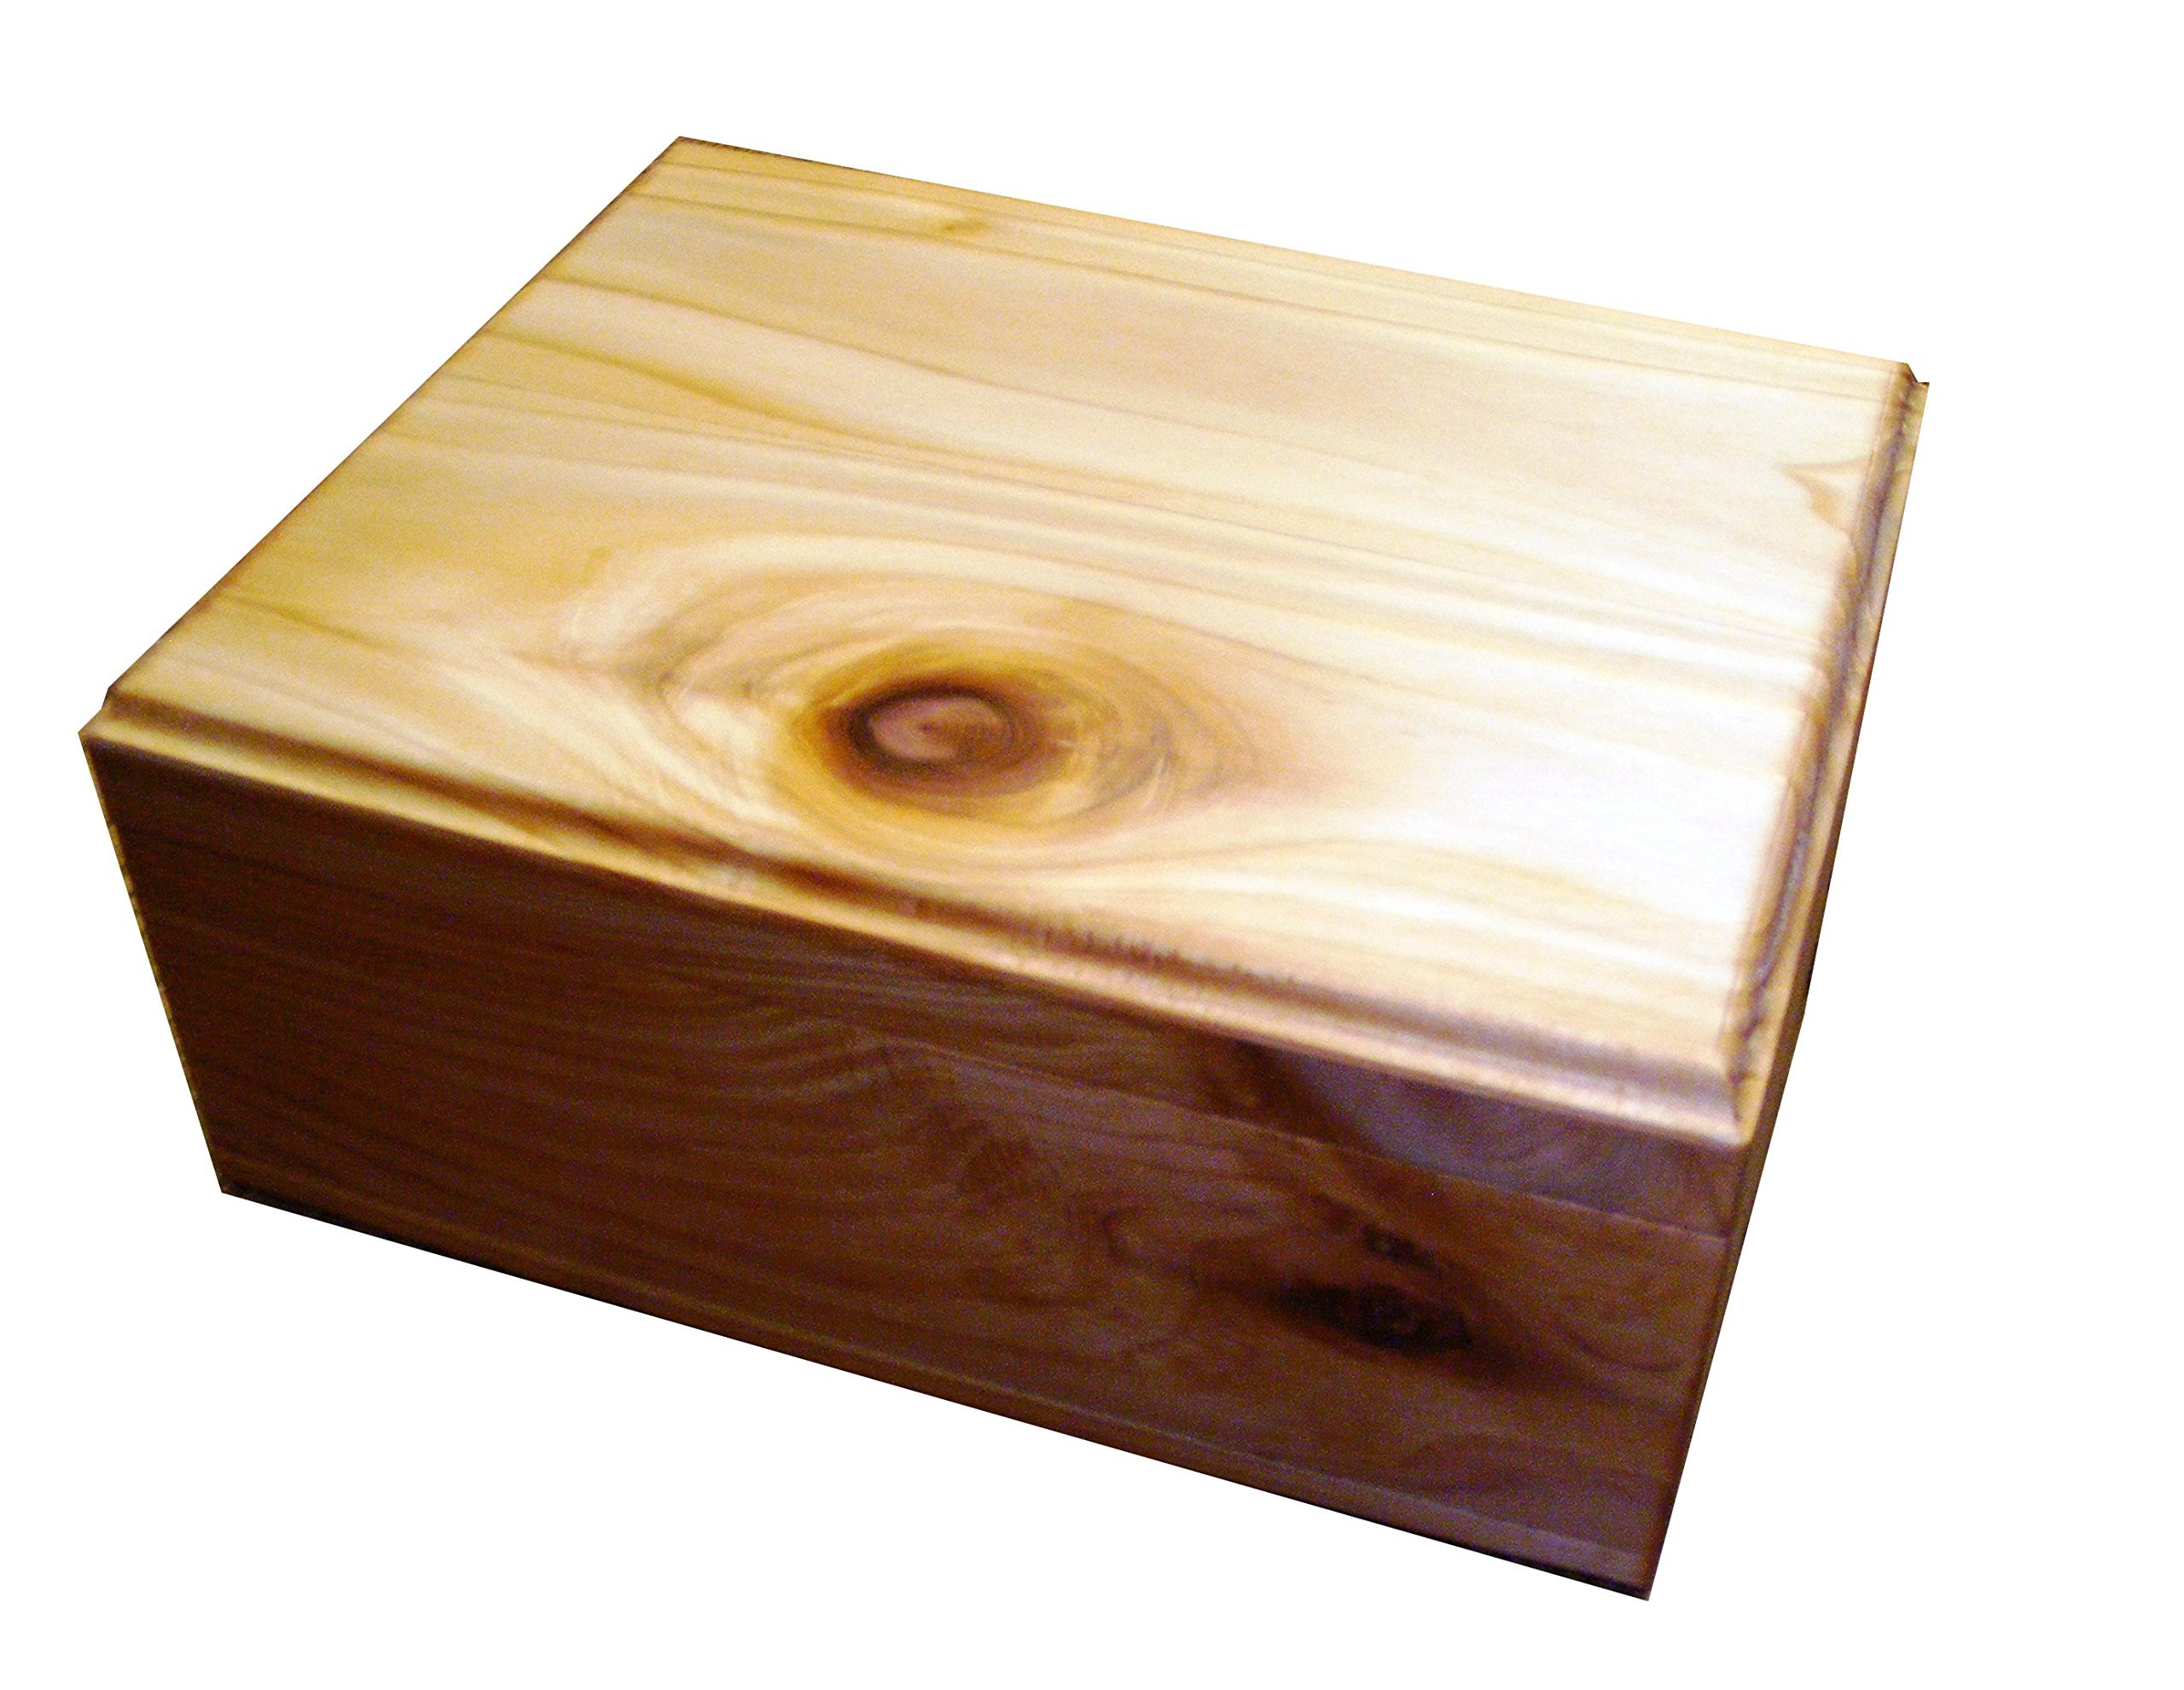 Steve's Gift Shoppe Cedar Keepsake Memory and Treasure Box or Storage Box - Size 10.75 x 8.5 x 5 Inches